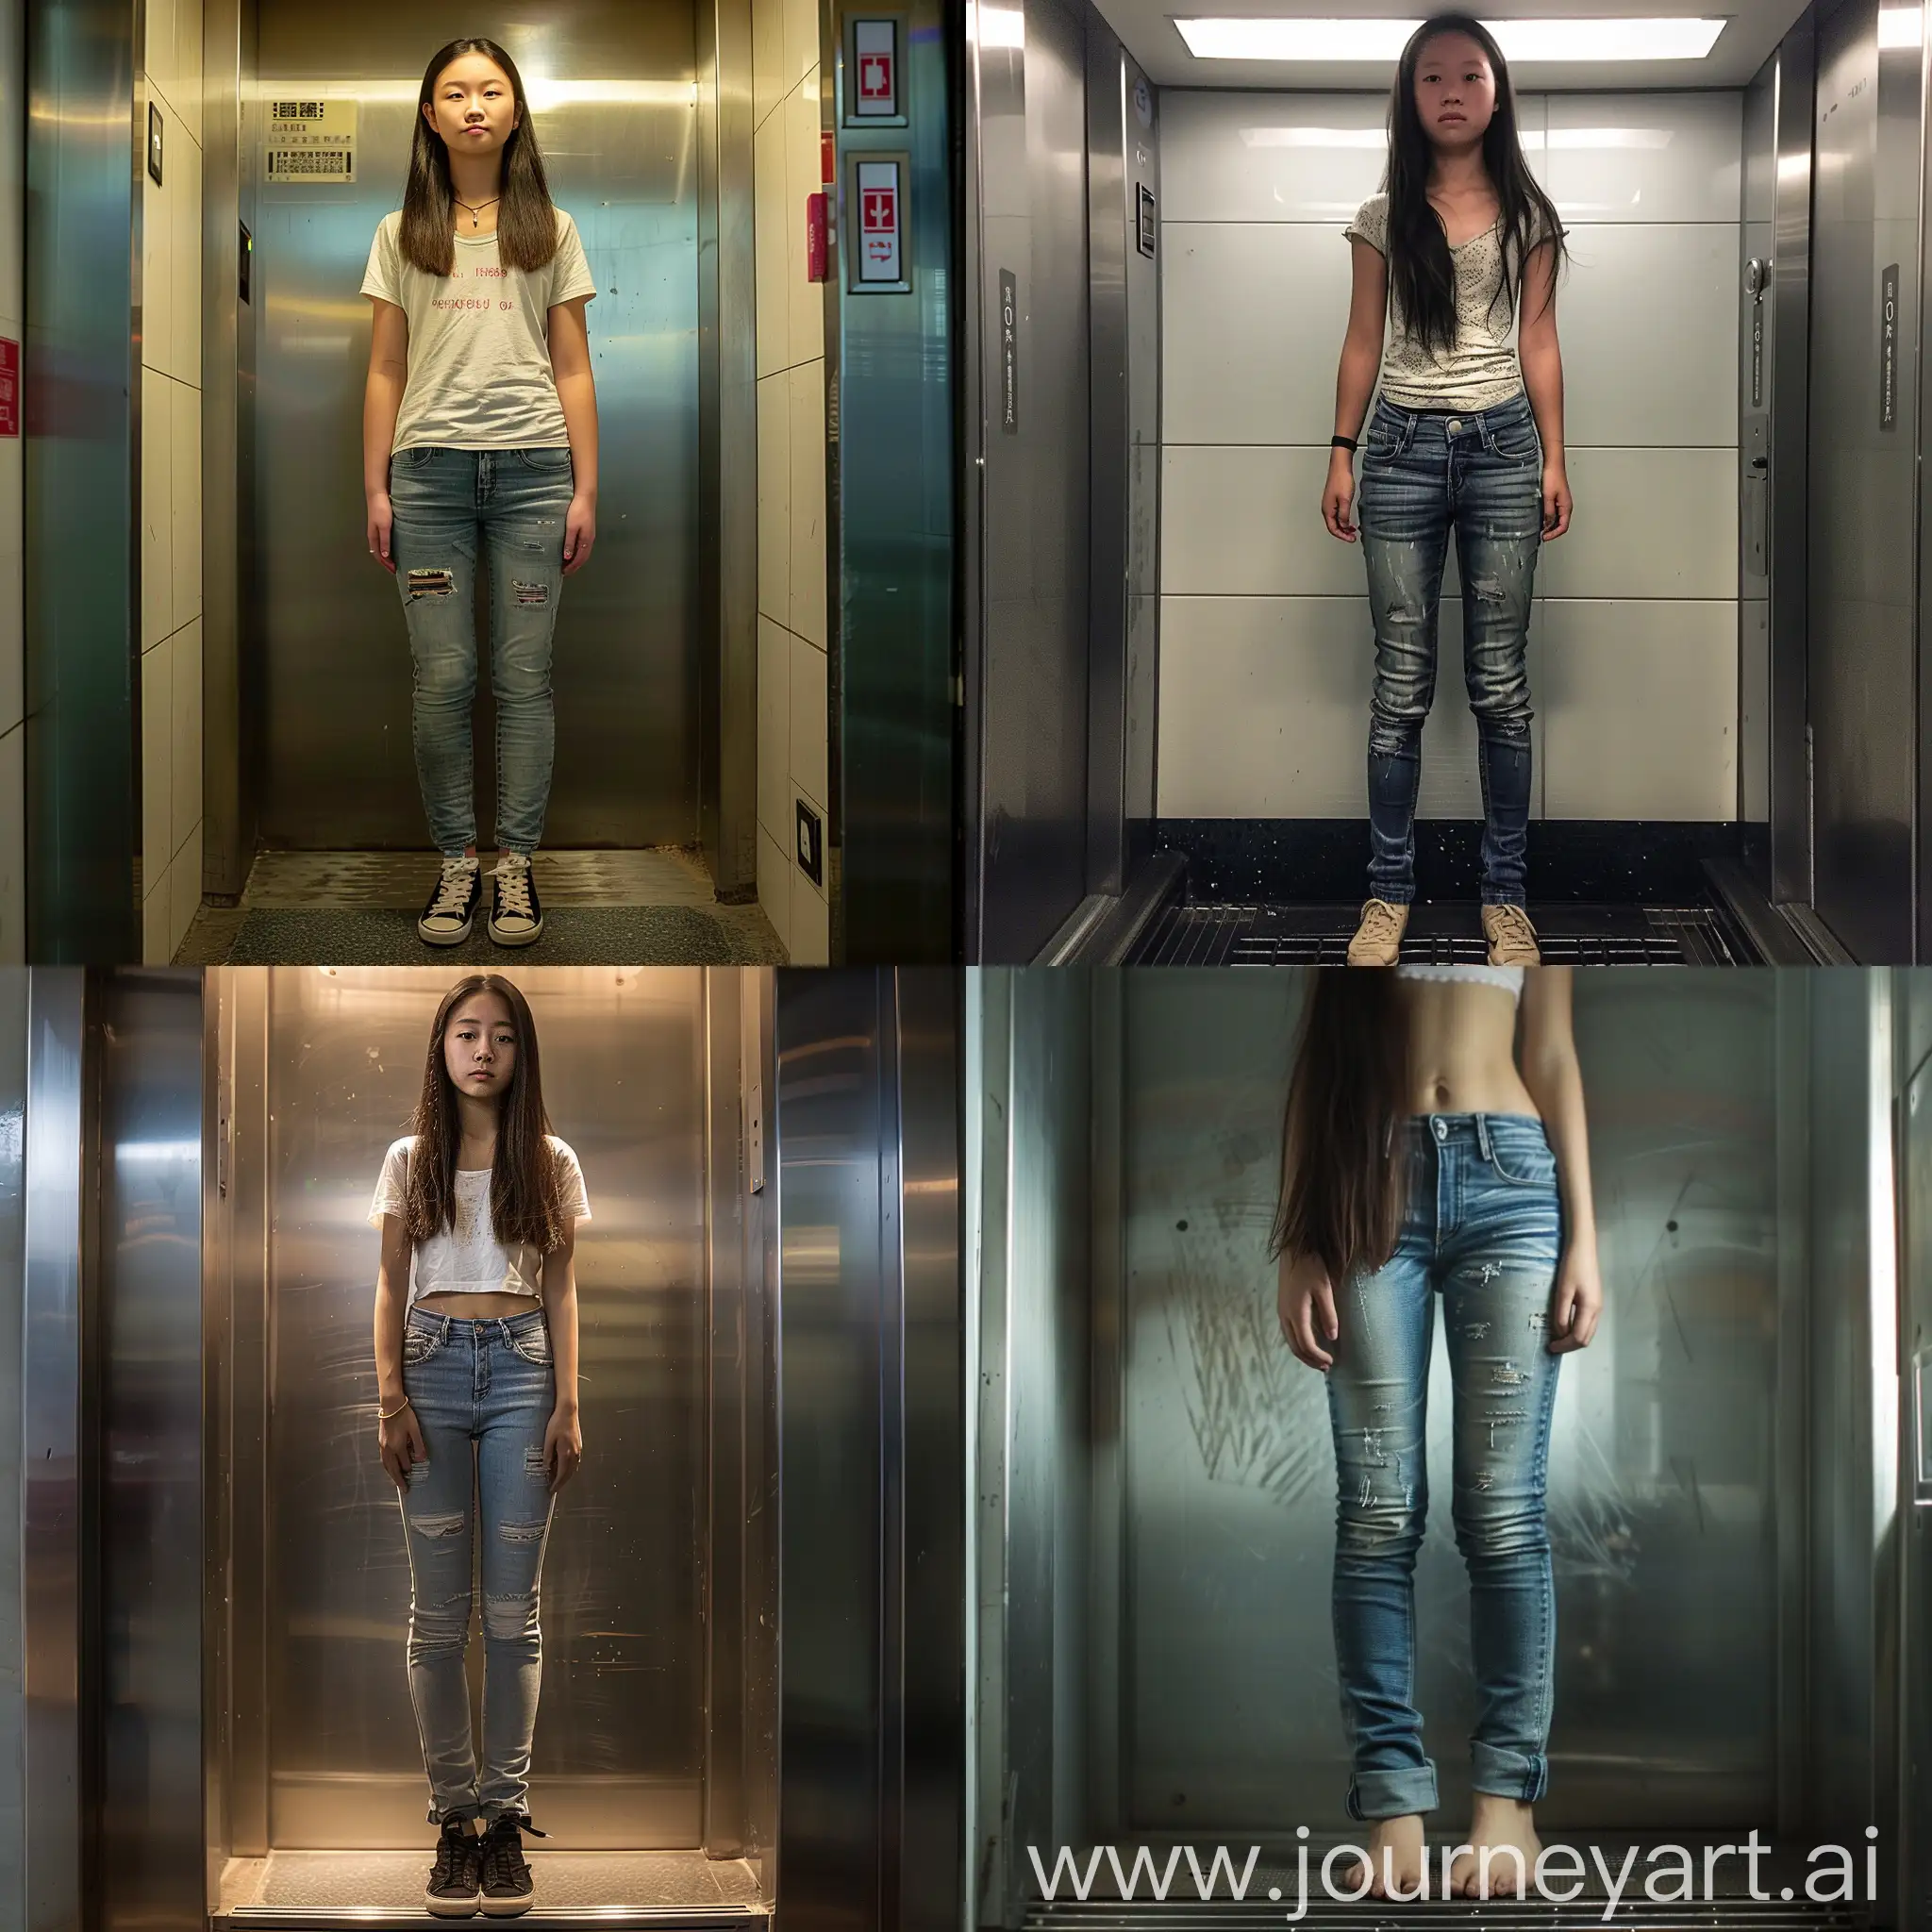 Teenage-Chinese-Girl-in-Skinny-Jeans-Standing-in-Elevator